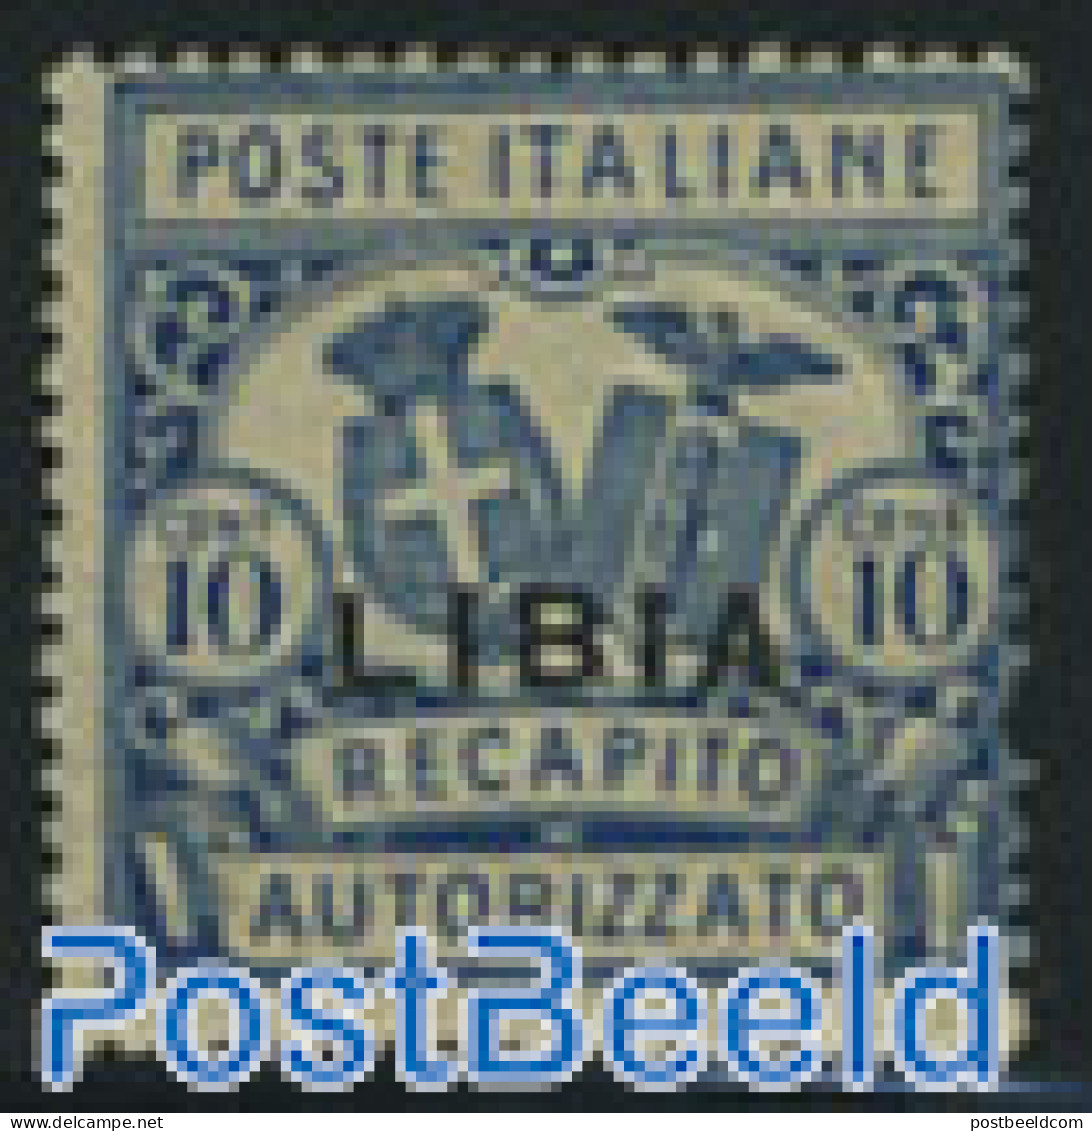 Italian Lybia 1929 Recapito 1v, Unused (hinged) - Libye